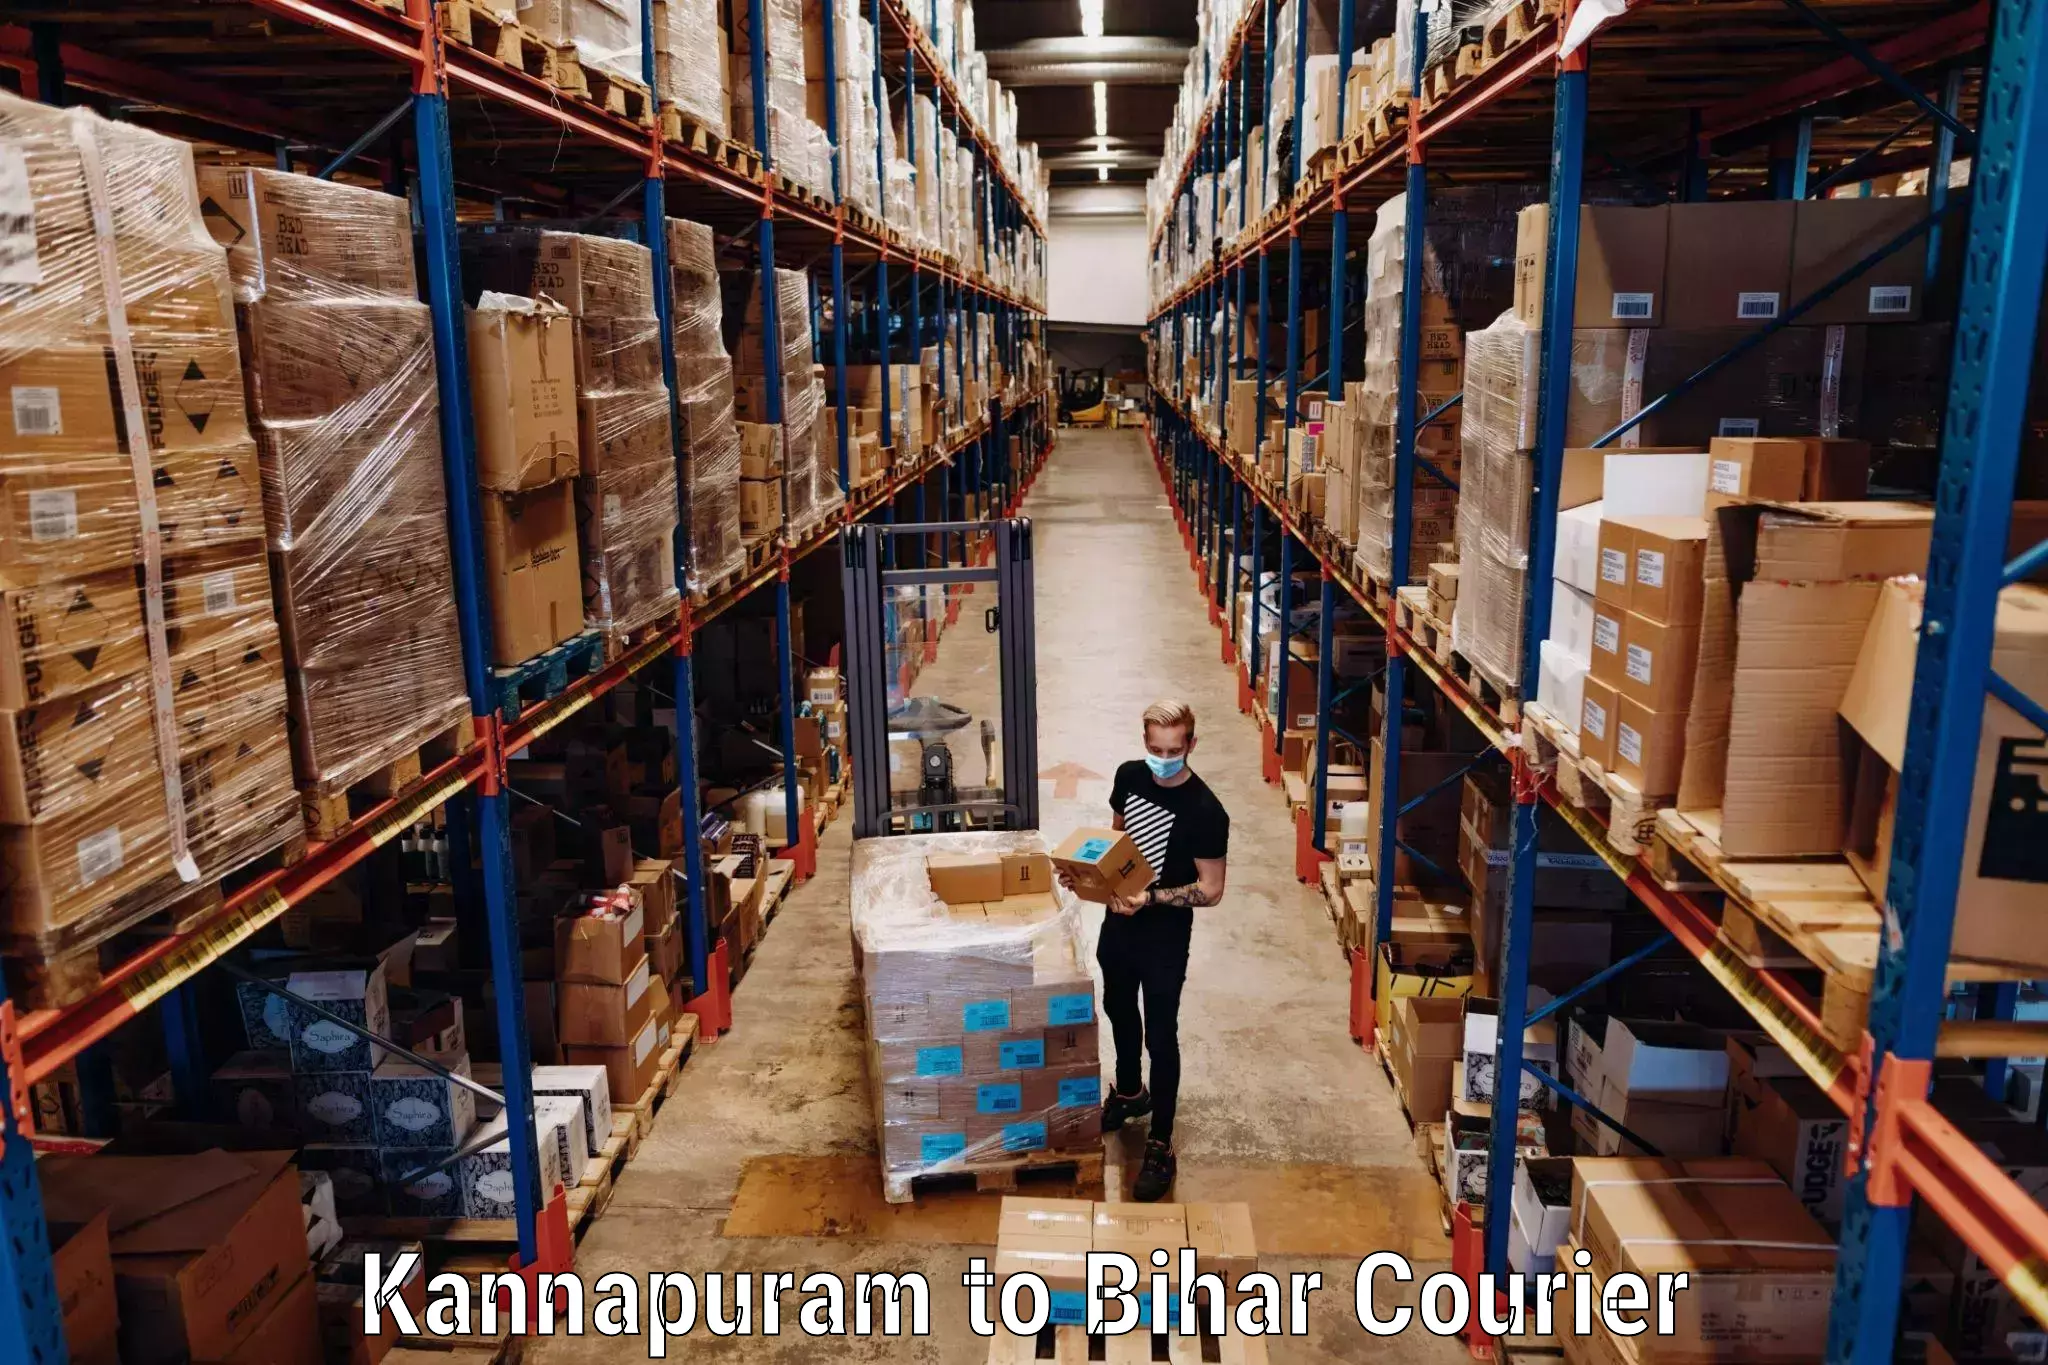 Baggage shipping advice Kannapuram to Bihar